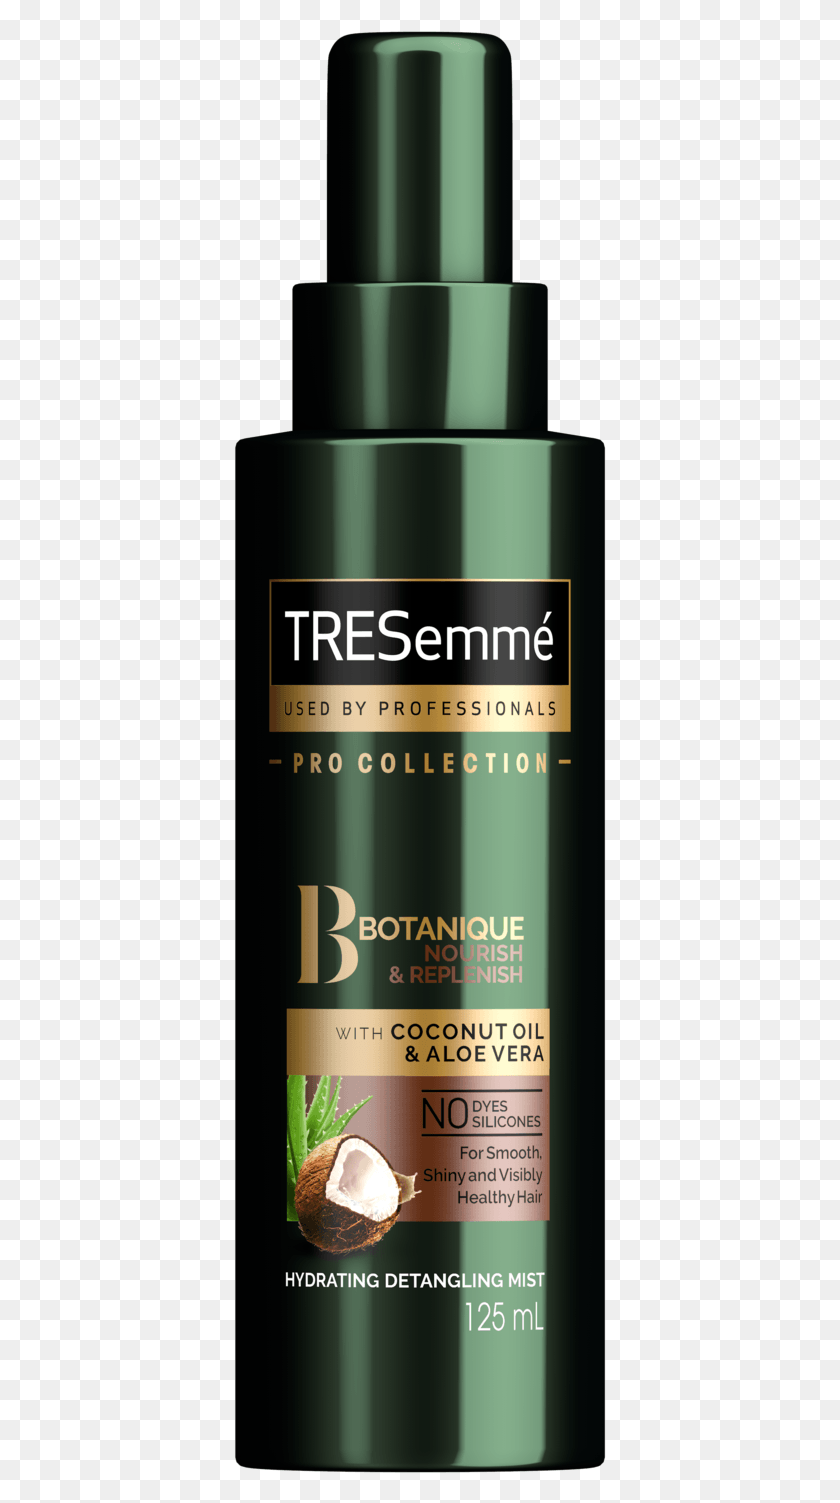 373x1443 Tresemme Botanique Spray Dry, Олово, Банка, Алюминий Png Скачать